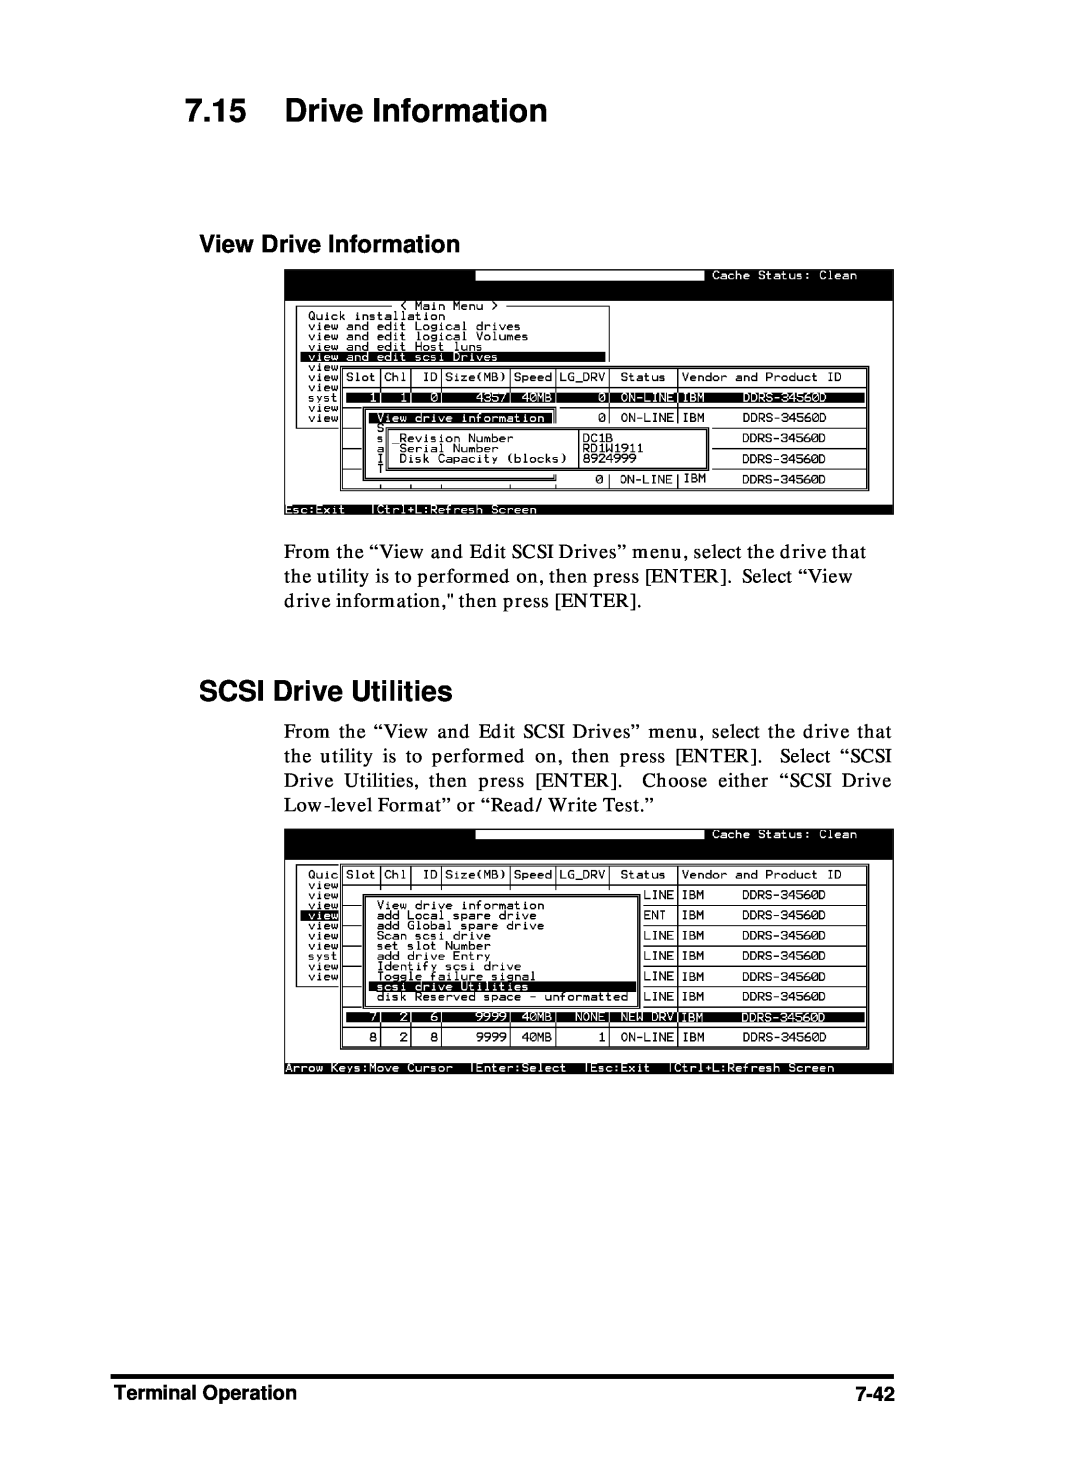 Compaq Infortrend manual SCSI Drive Utilities, View Drive Information 